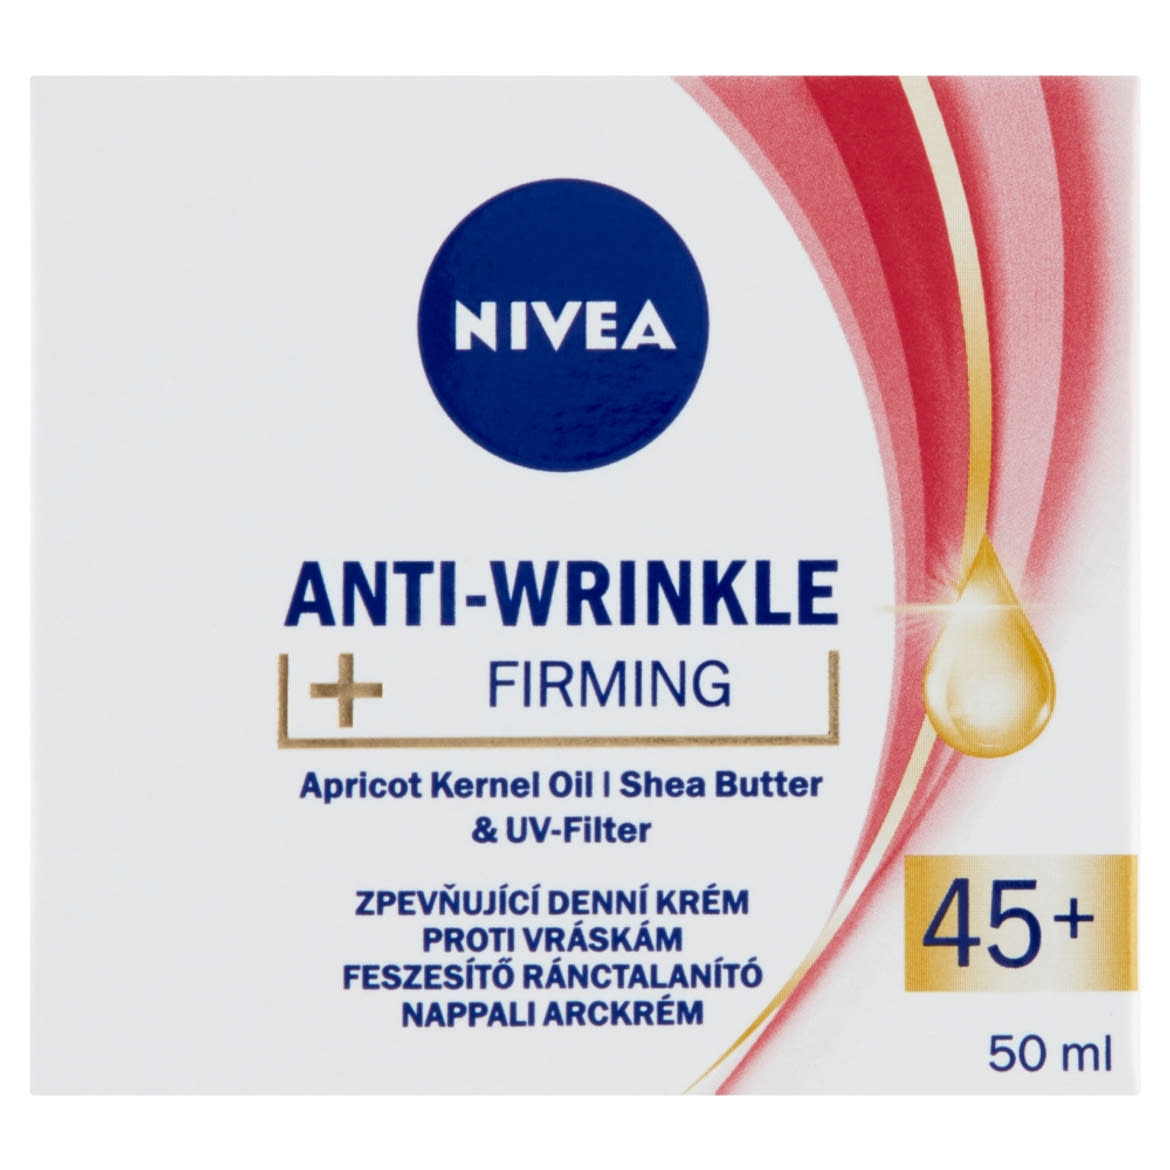 NIVEA Anti Wrinkle 45+ nappali arckrém